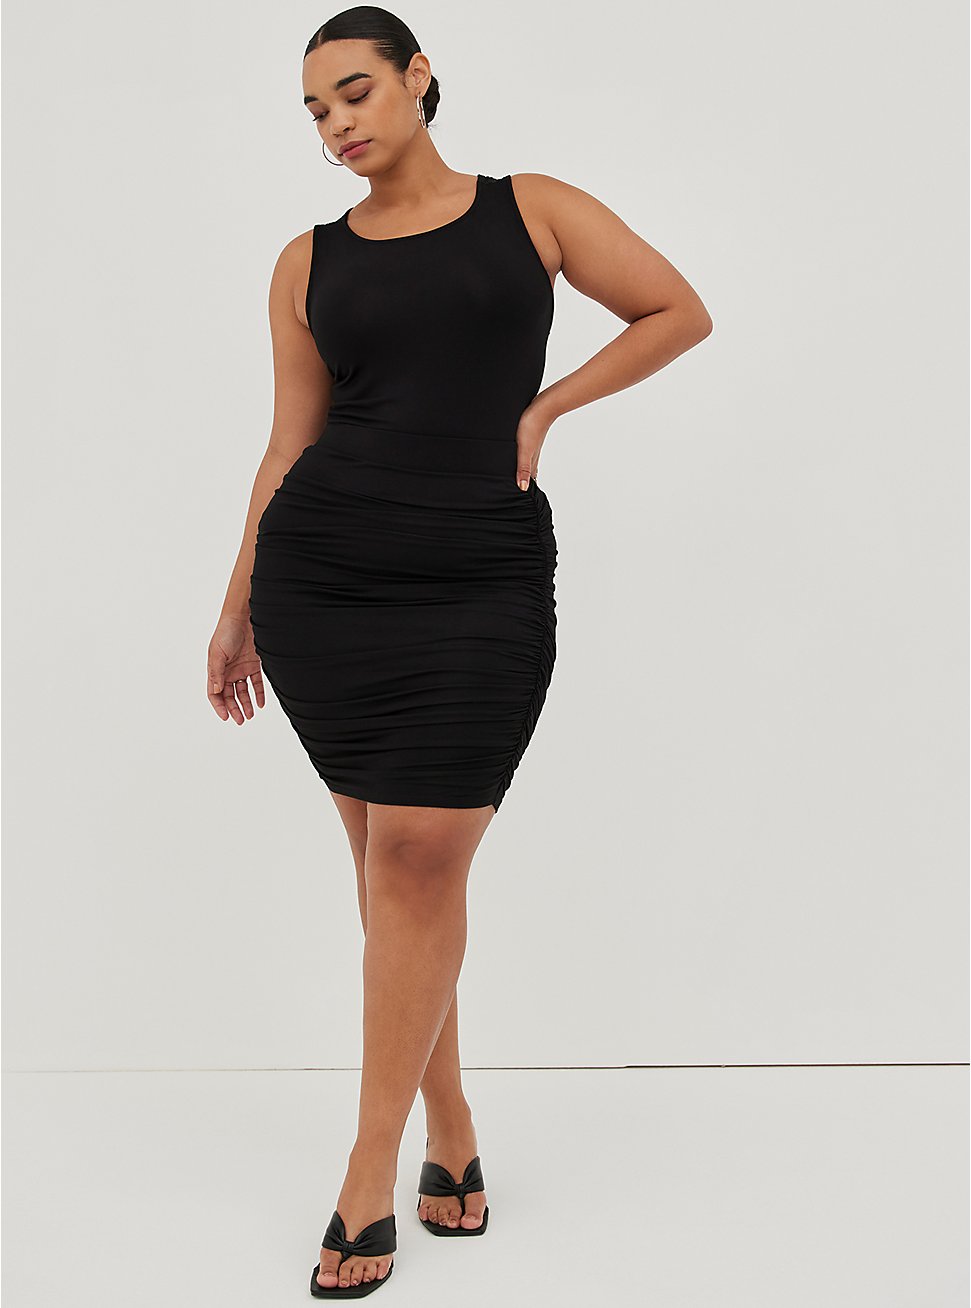 Plus Size Cinched Mini Skirt - Super Soft Black, DEEP BLACK, hi-res